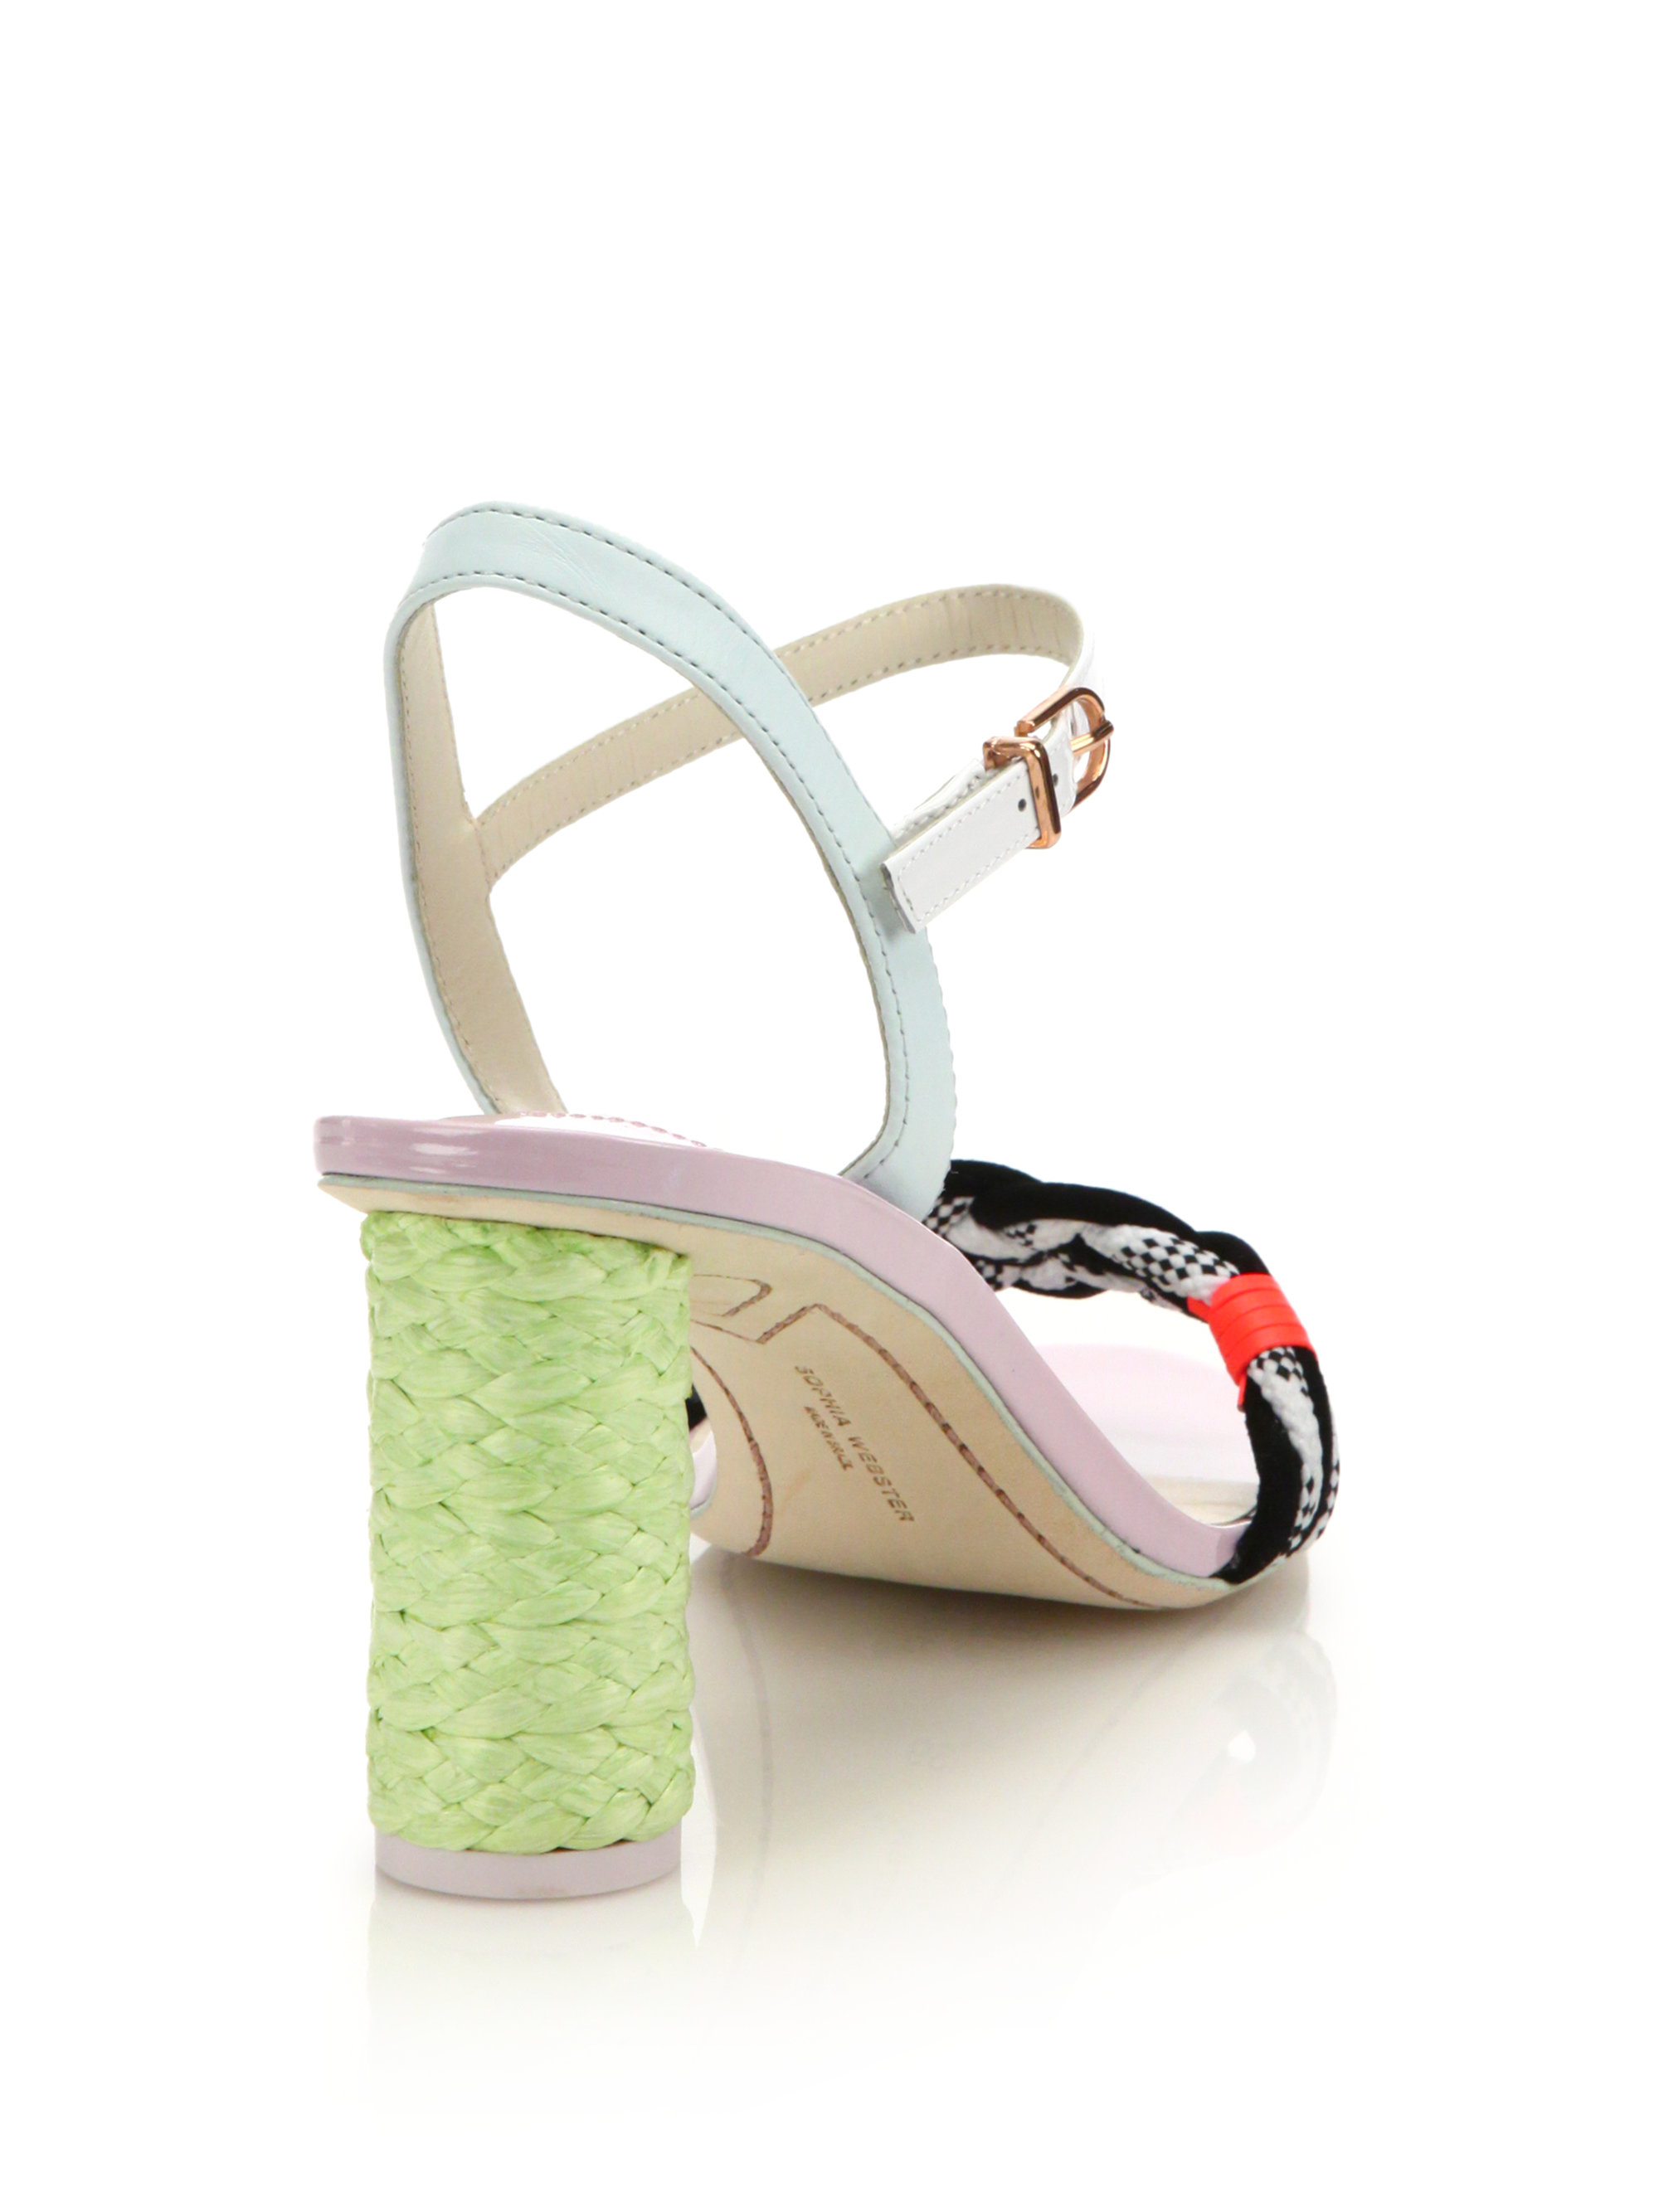 Lyst - Sophia Webster Atlanta Pastel Leather & Rope Sandals